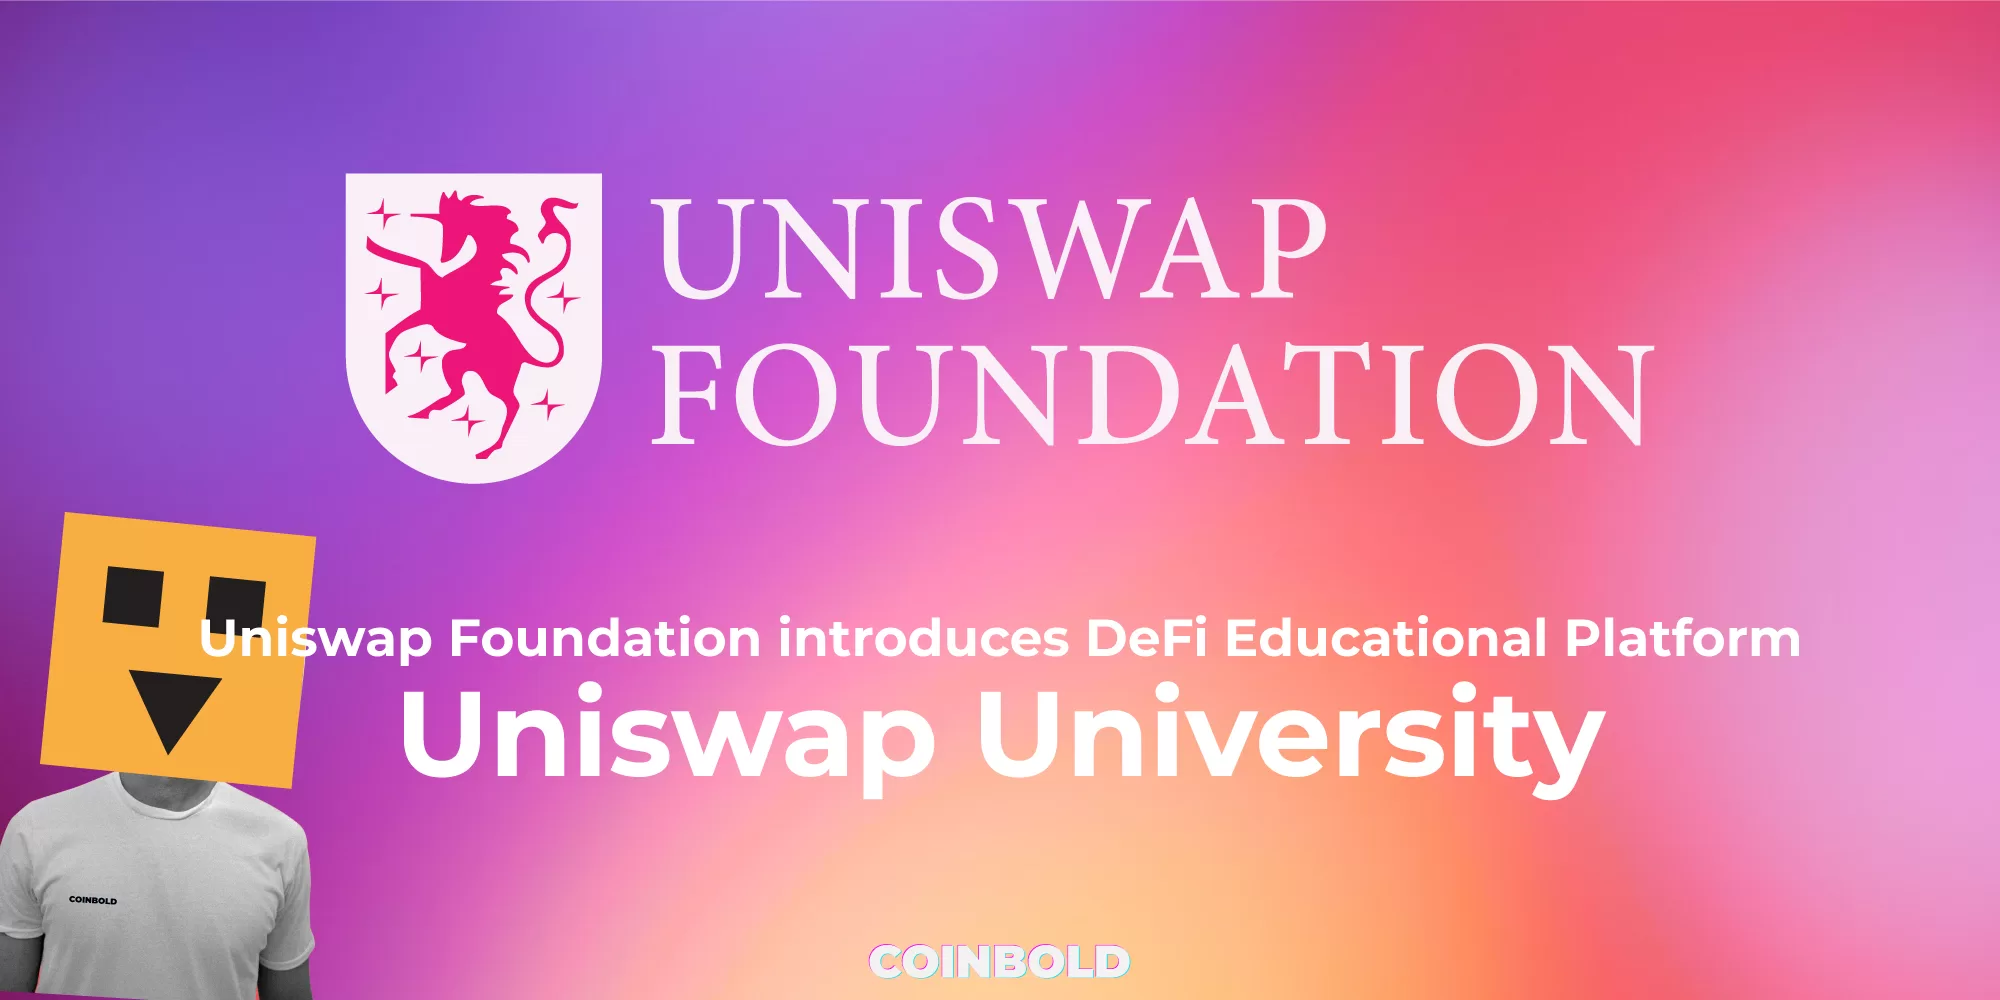 Uniswap Foundation introduces DeFi Educational Platform Uniswap University